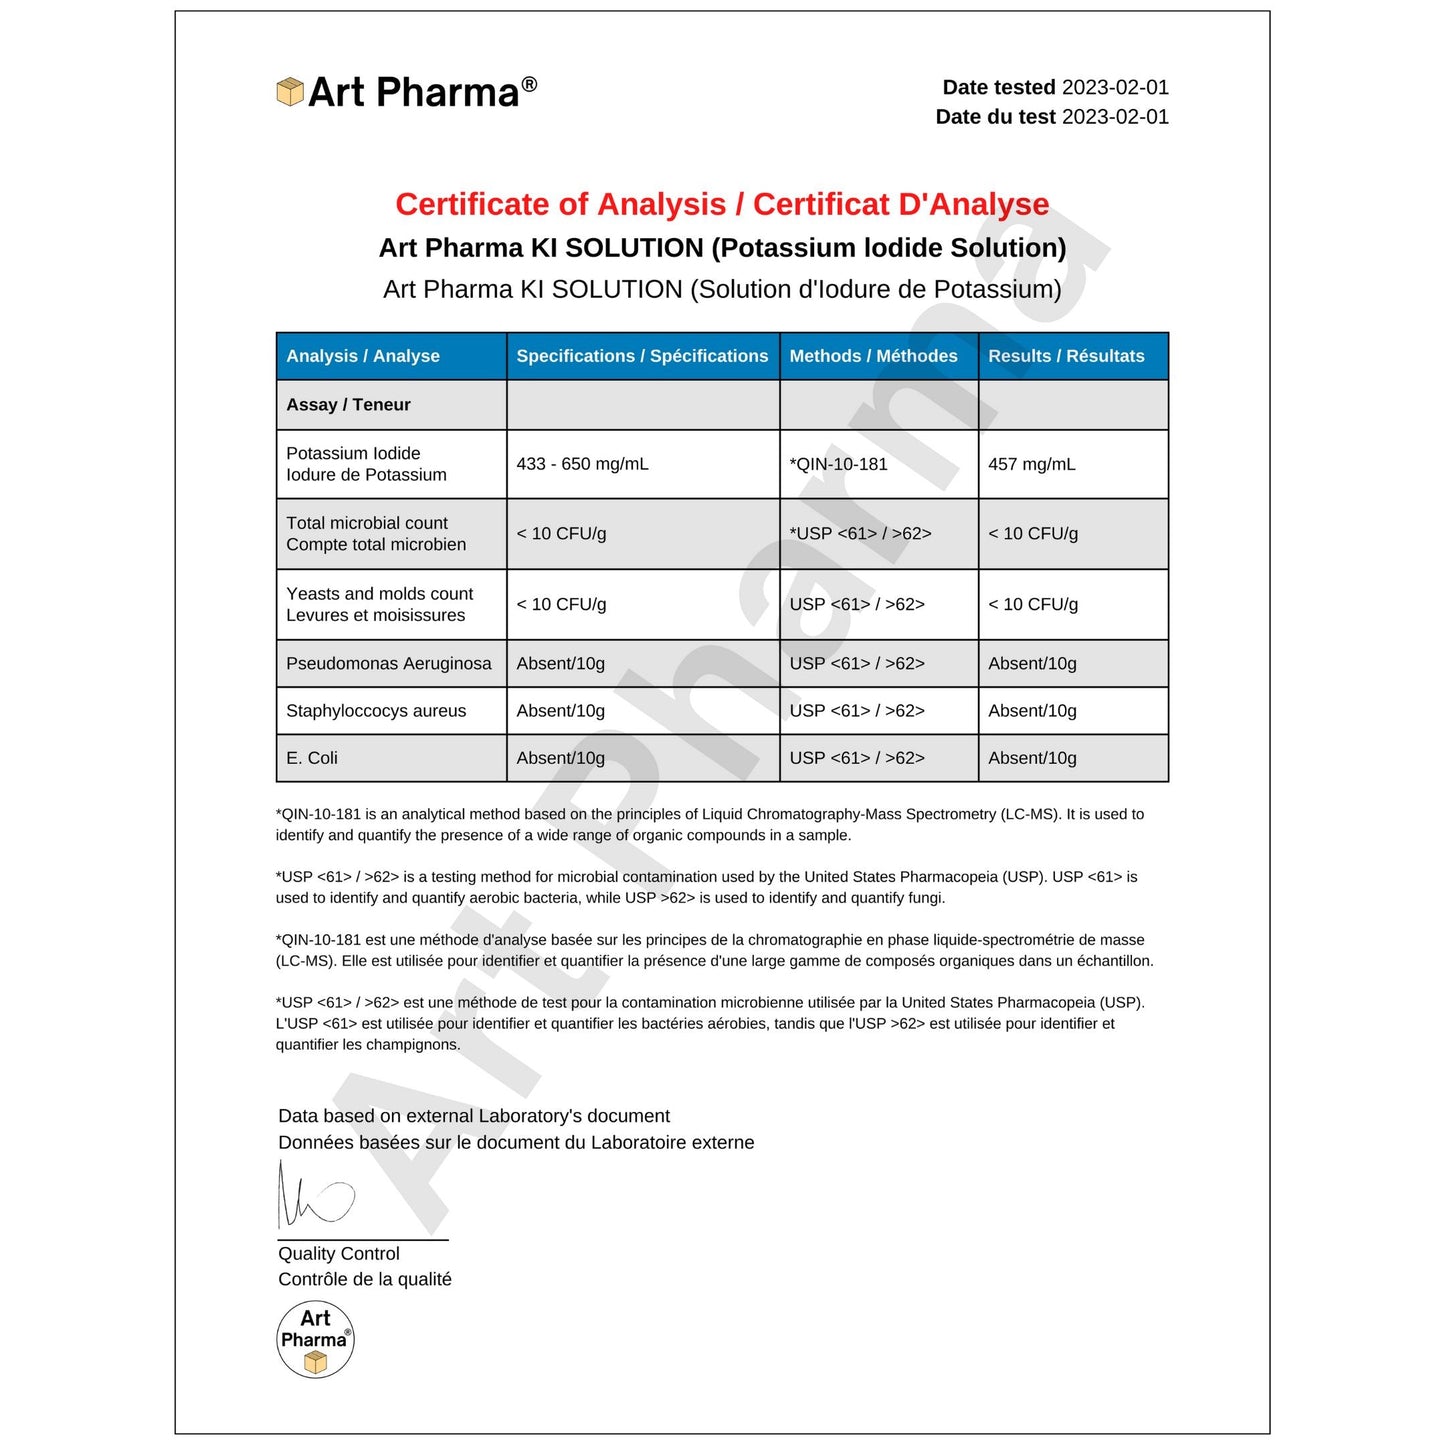 Art Pharma KI Solution® 1 oz. (30 mL) Liquid Potassium Iodide Dropper - Art Pharma®